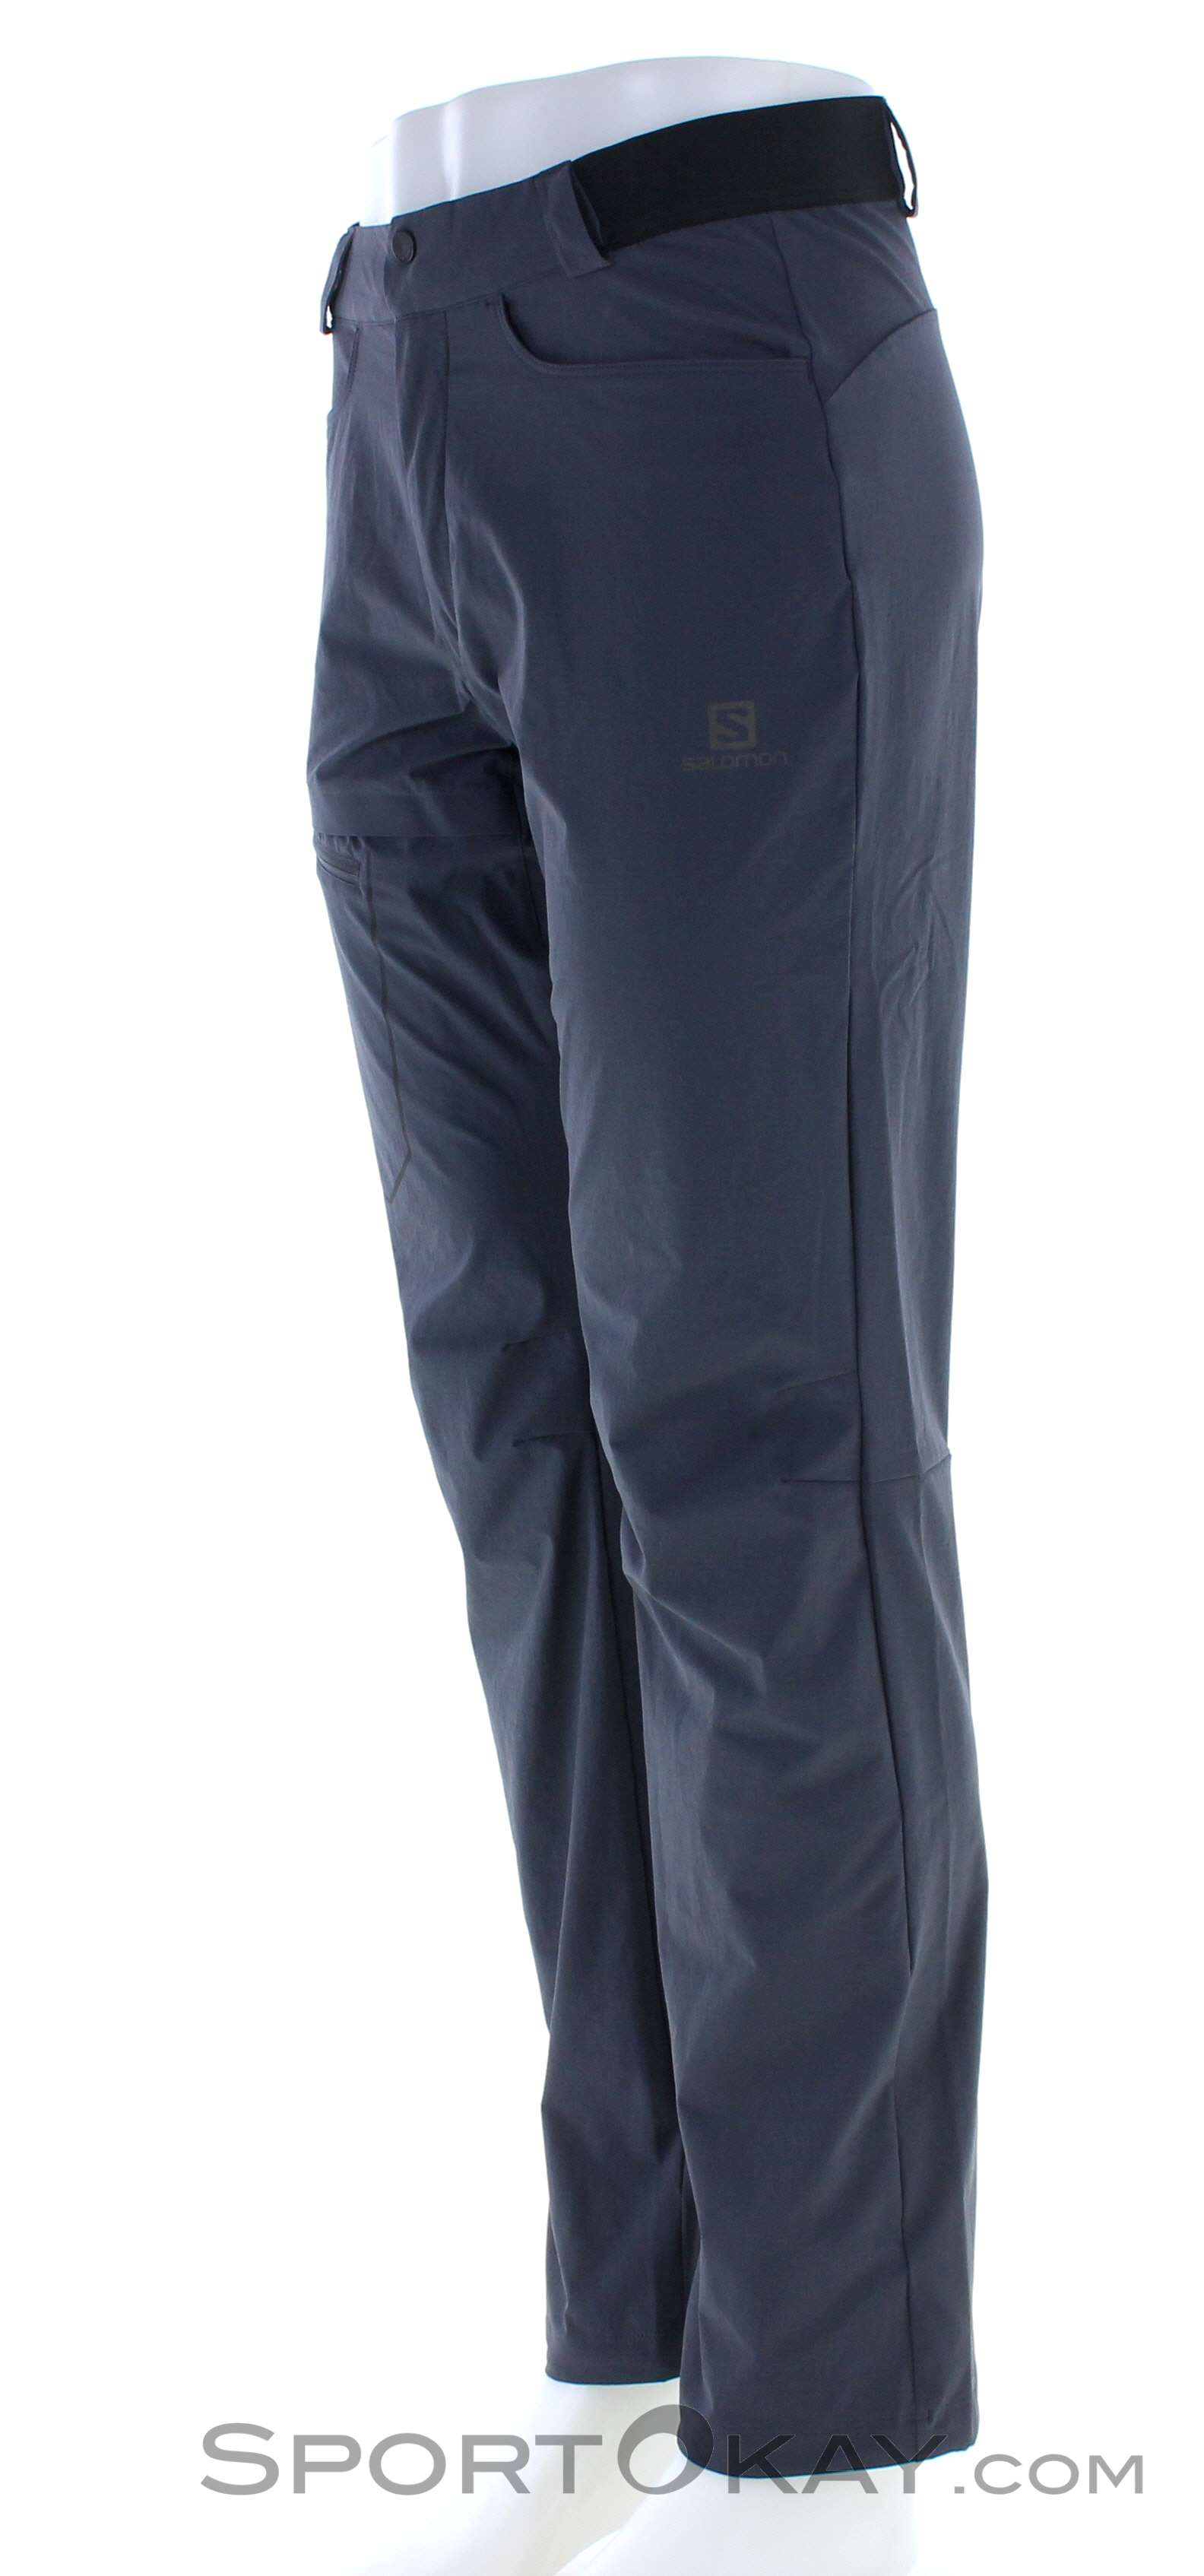 Salomon Wayfarer Outdoor Pants - Pants - Outdoor Clothing - All